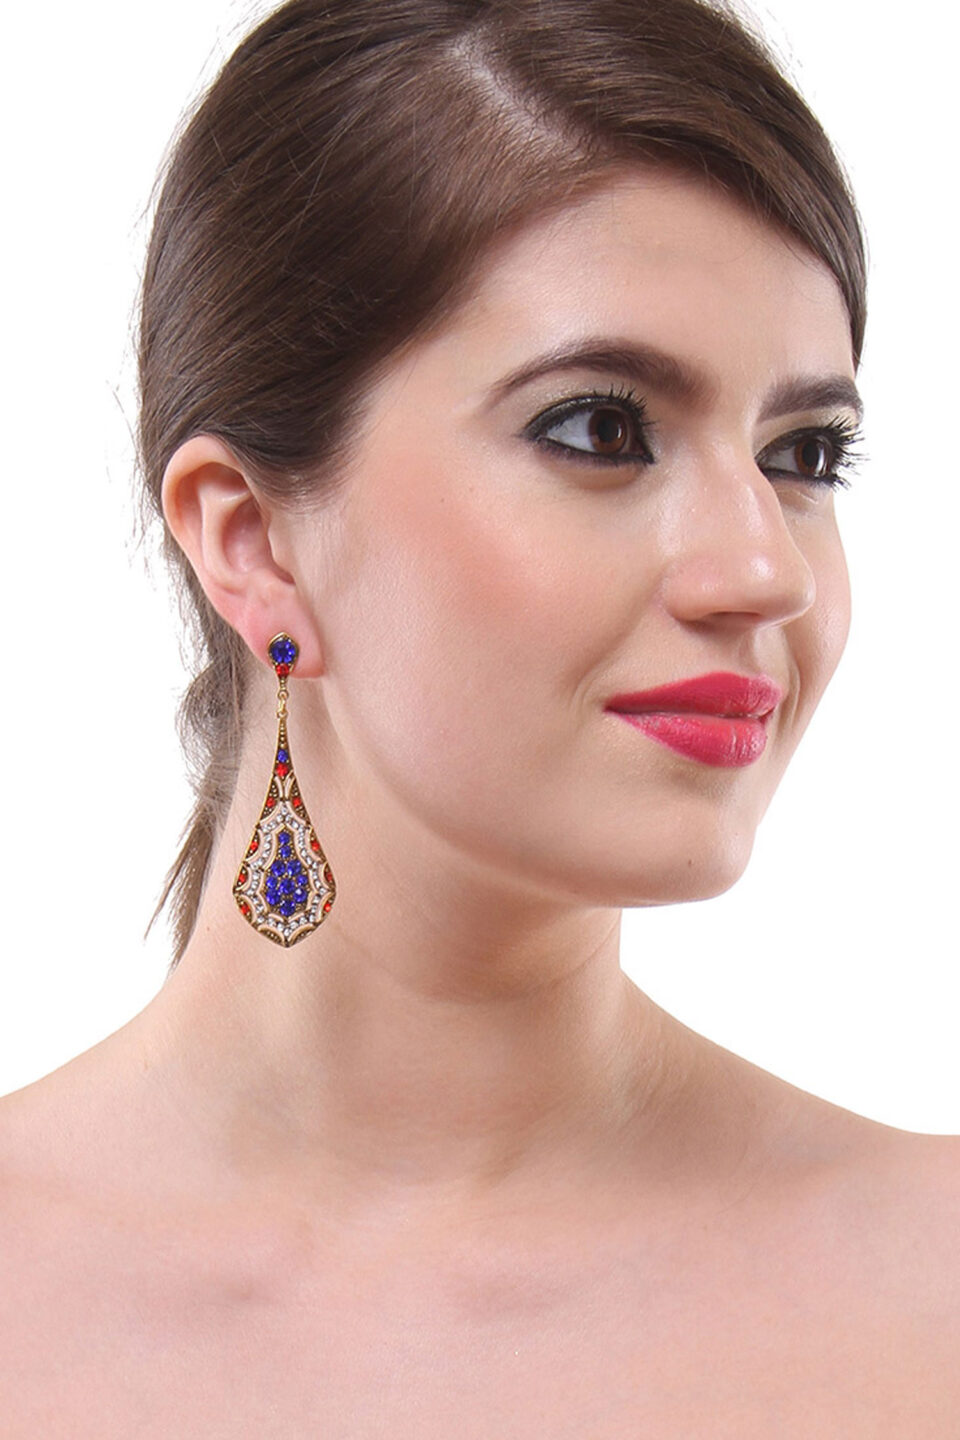 fashionable earrings for festival